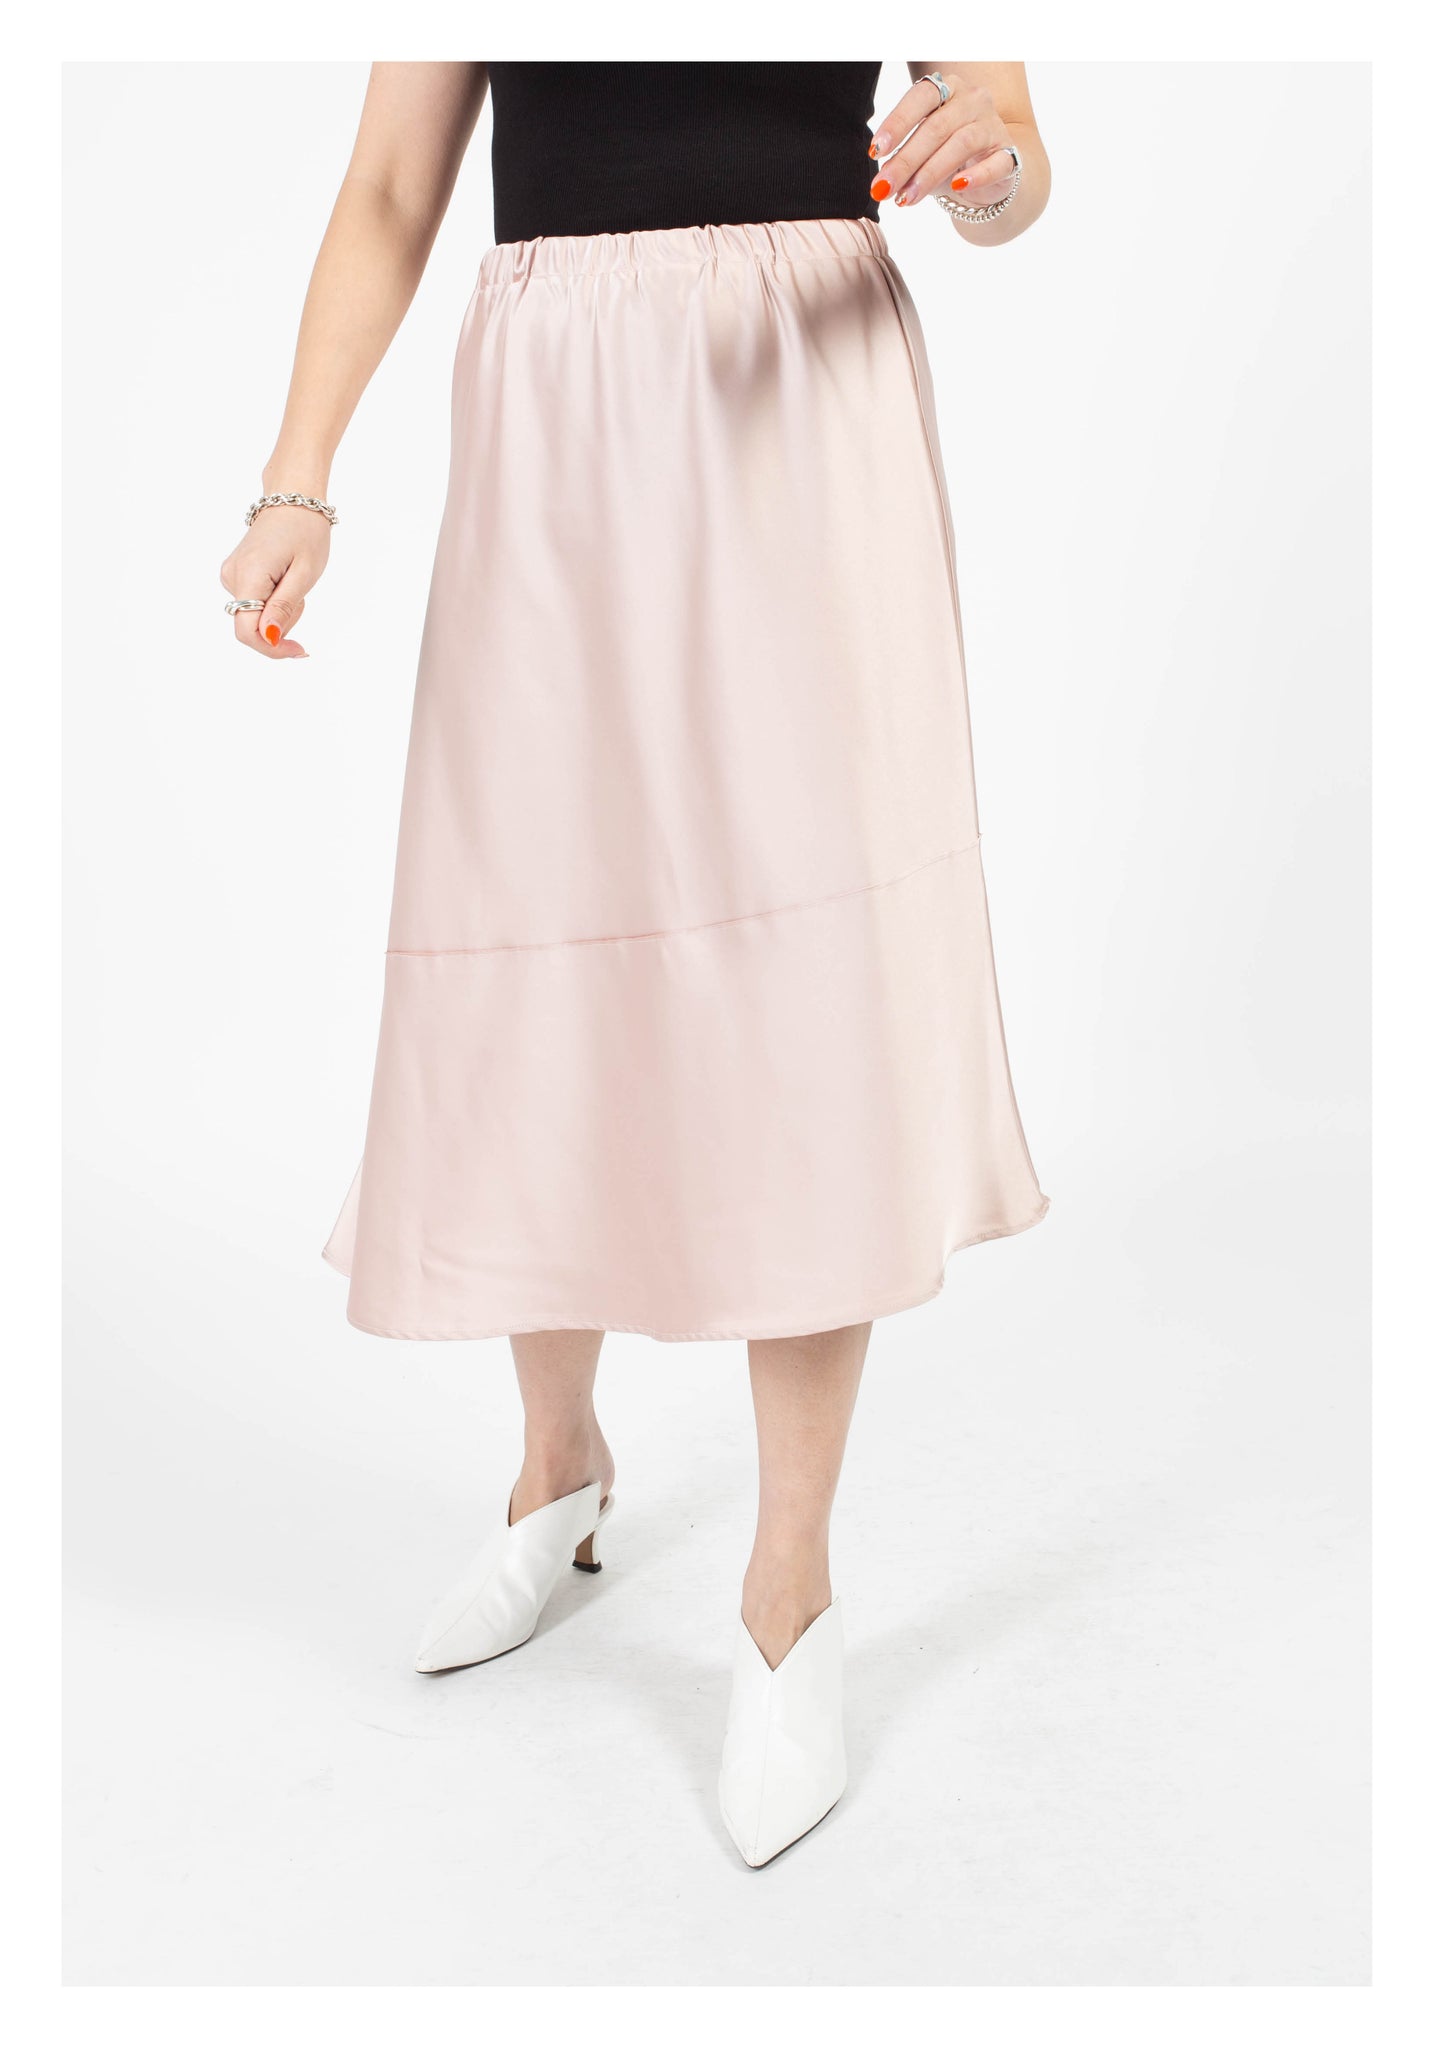 Asymmetric Flare Satin Skirt Dirty Pink